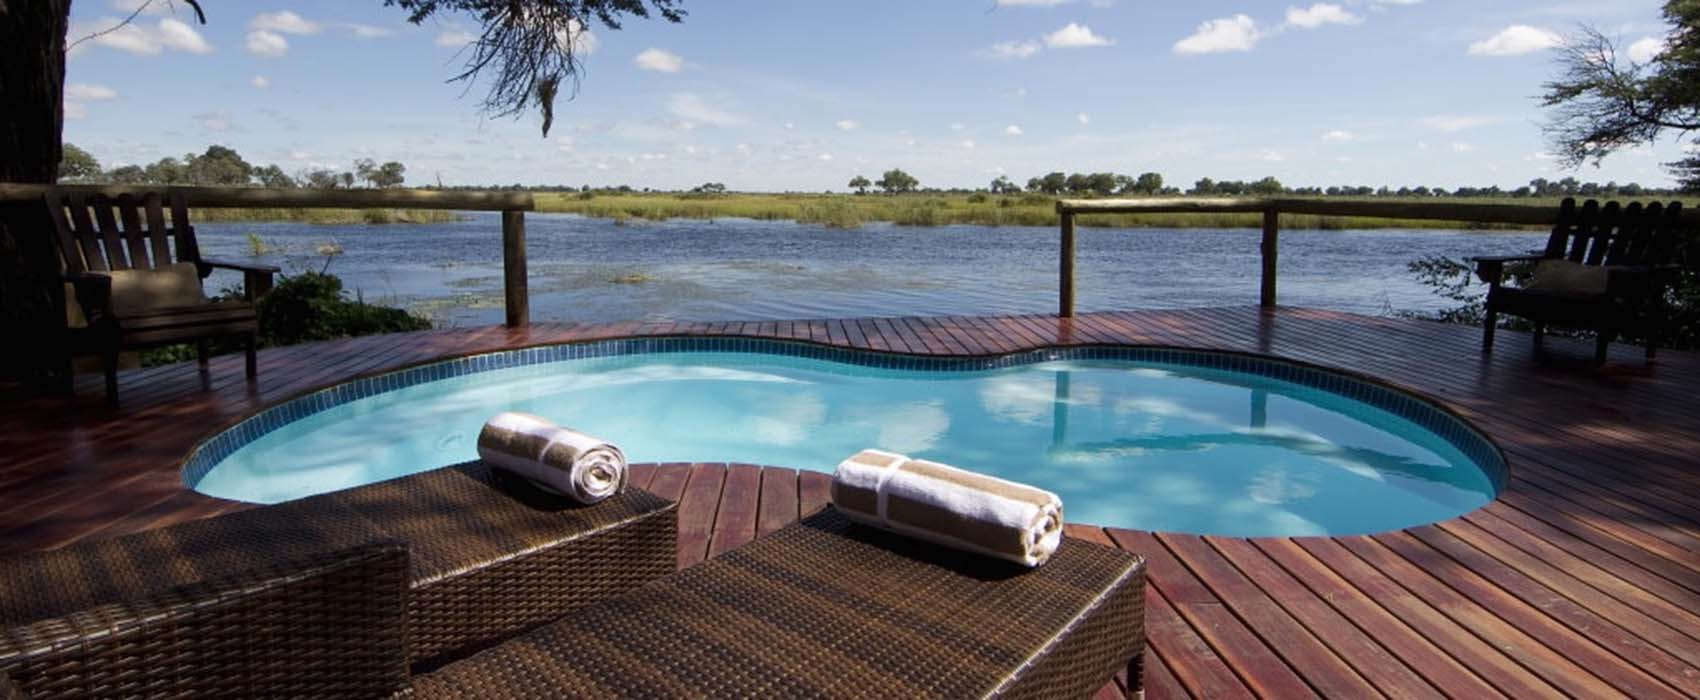 Botswana safari holiday romance